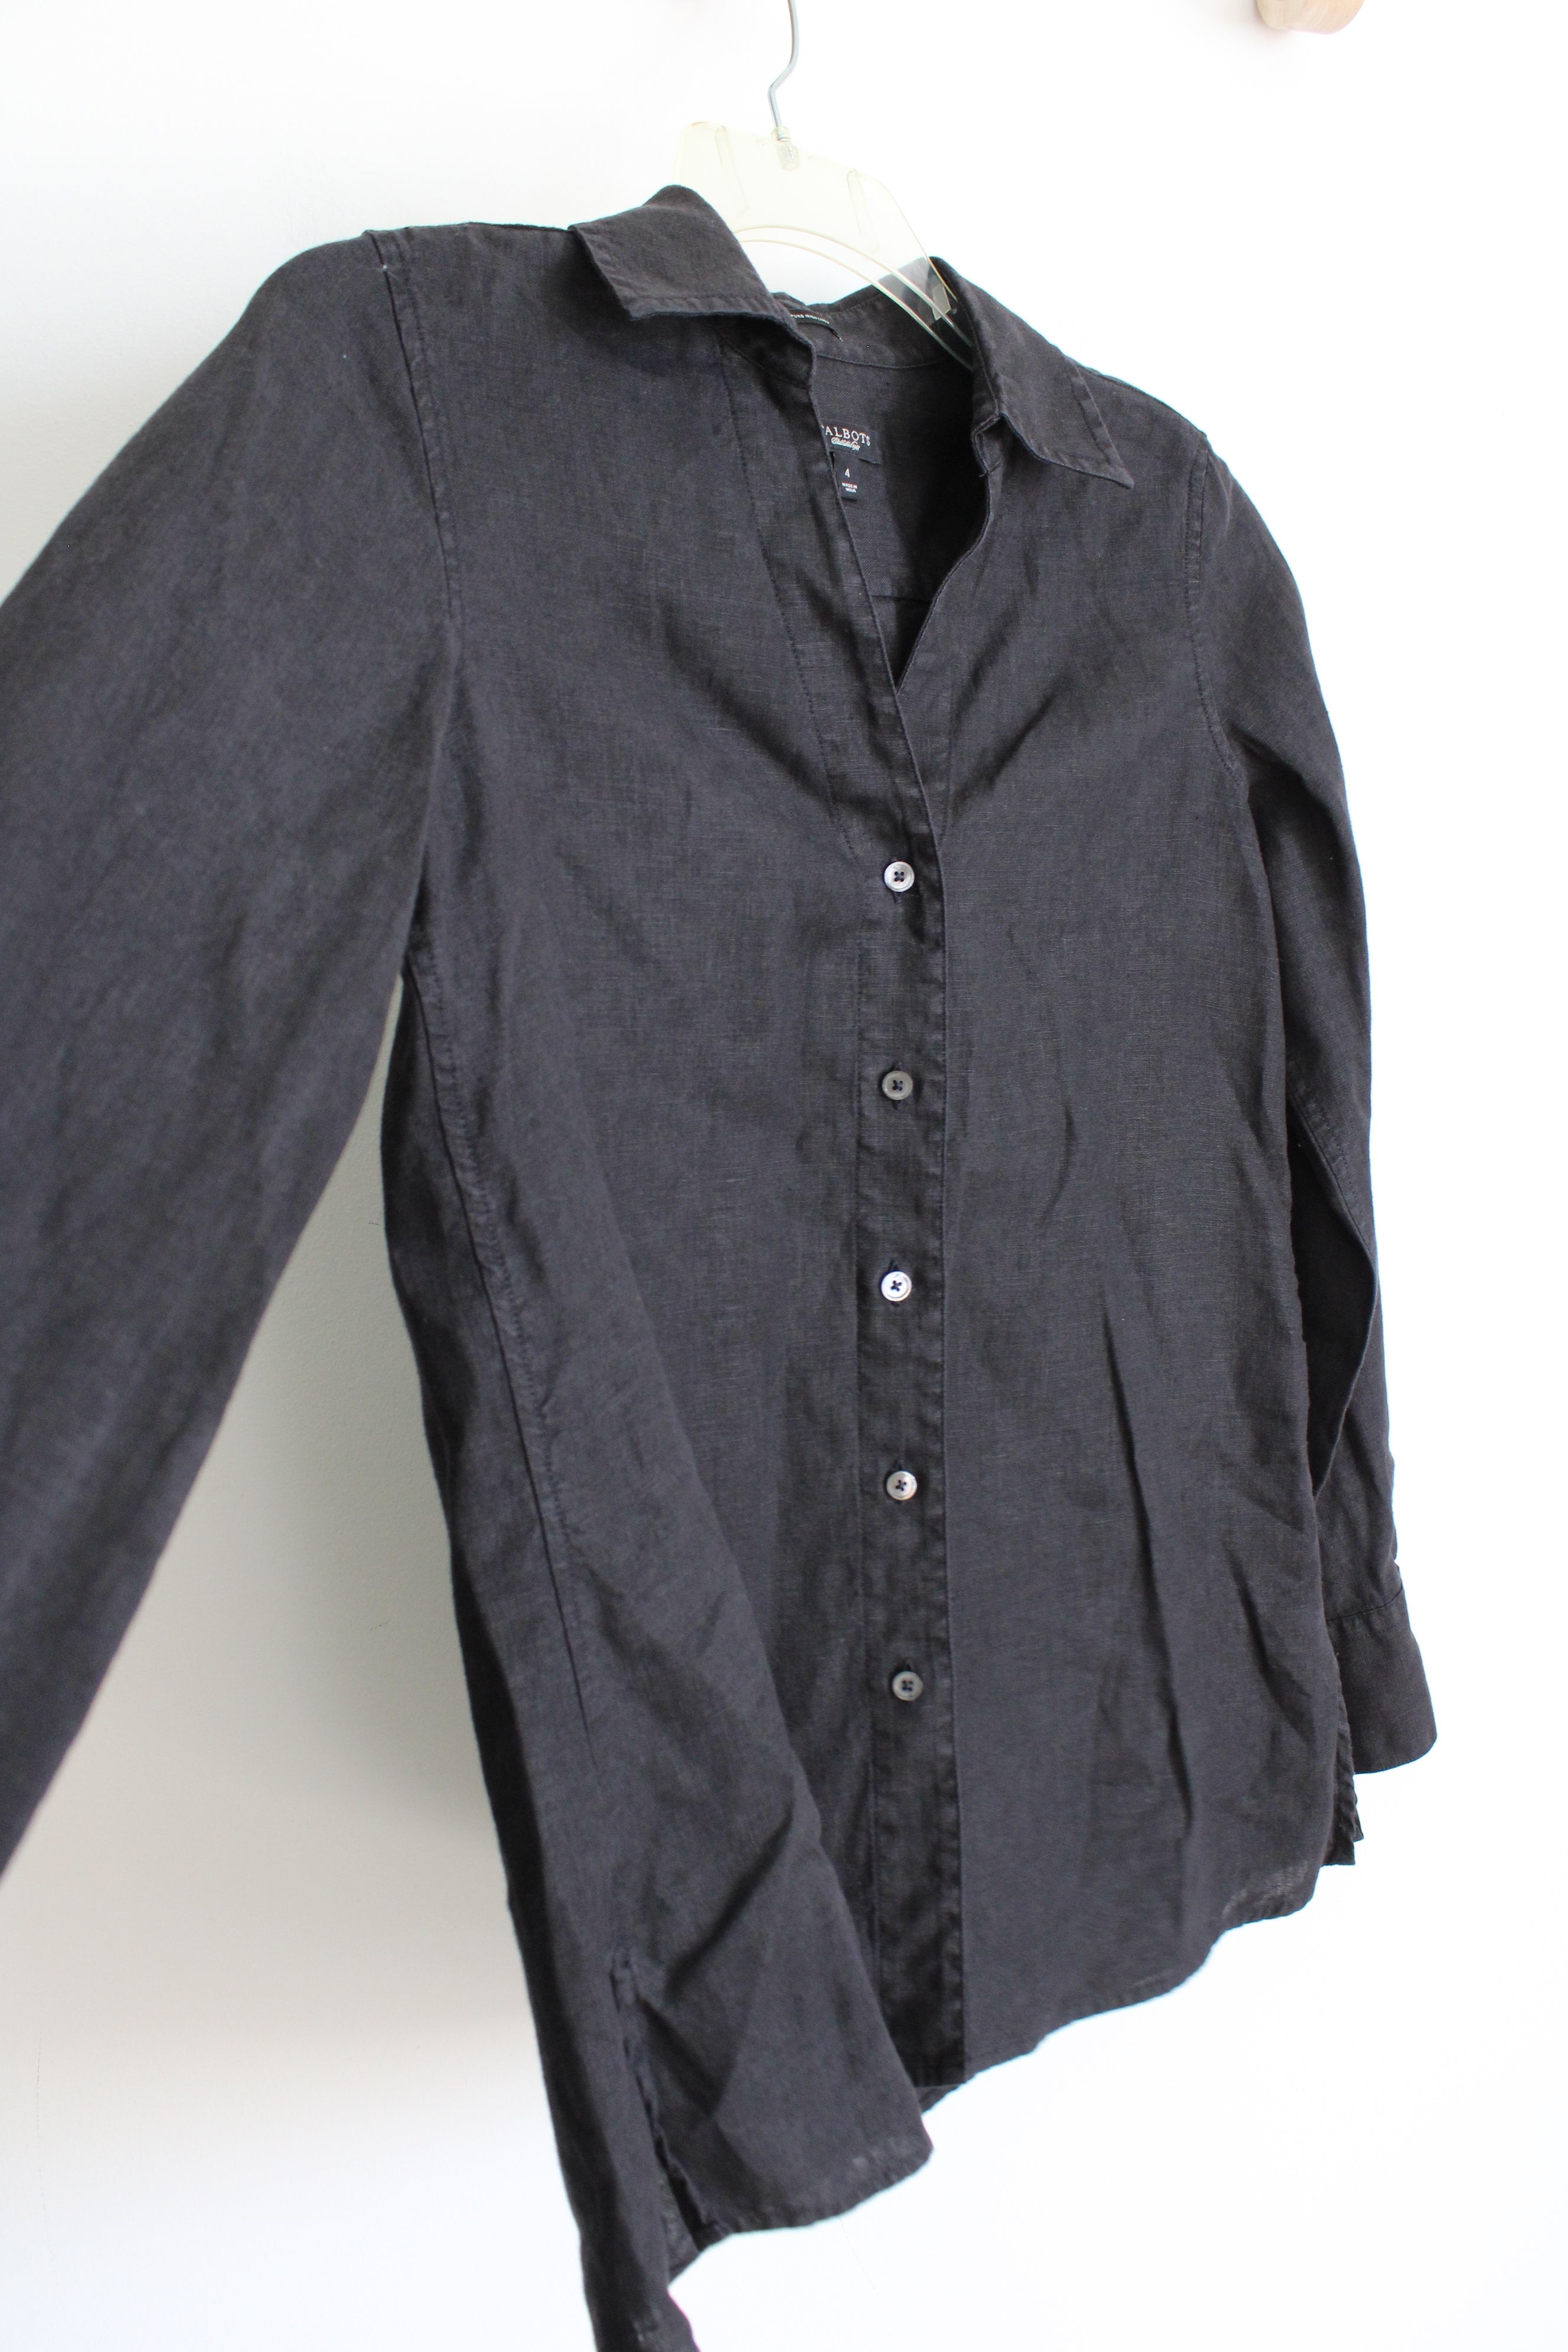 Talbots Pure Irish Linen Black Button Down Shirt | 4